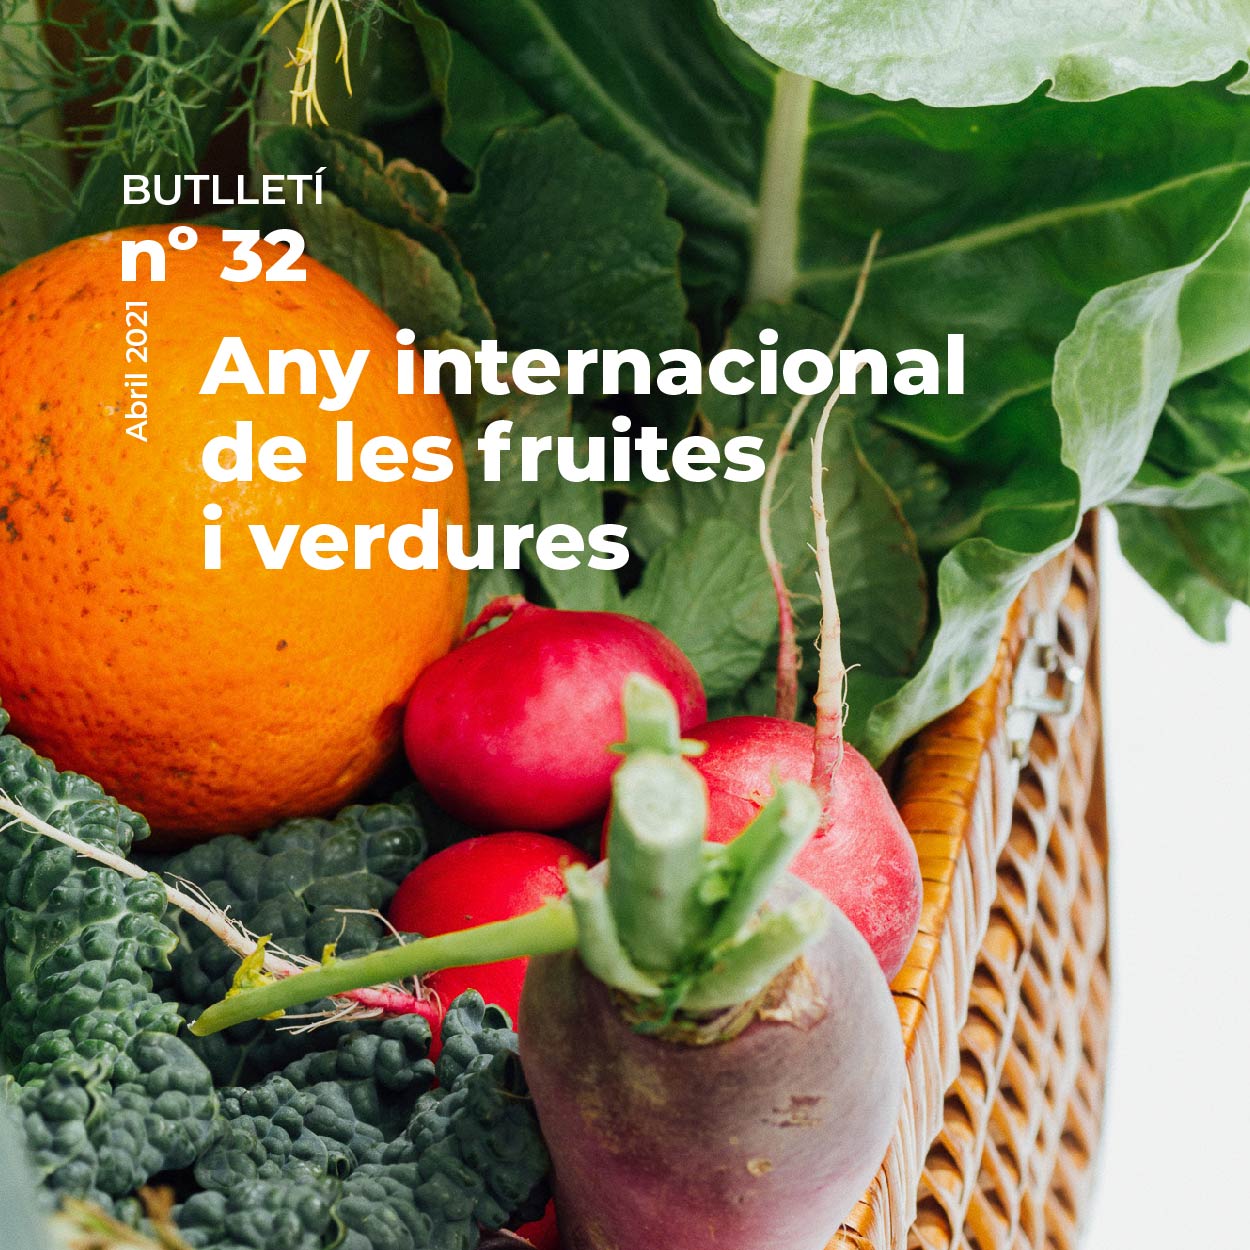 Butlletí 32 Any internacional de les fruites i verdures